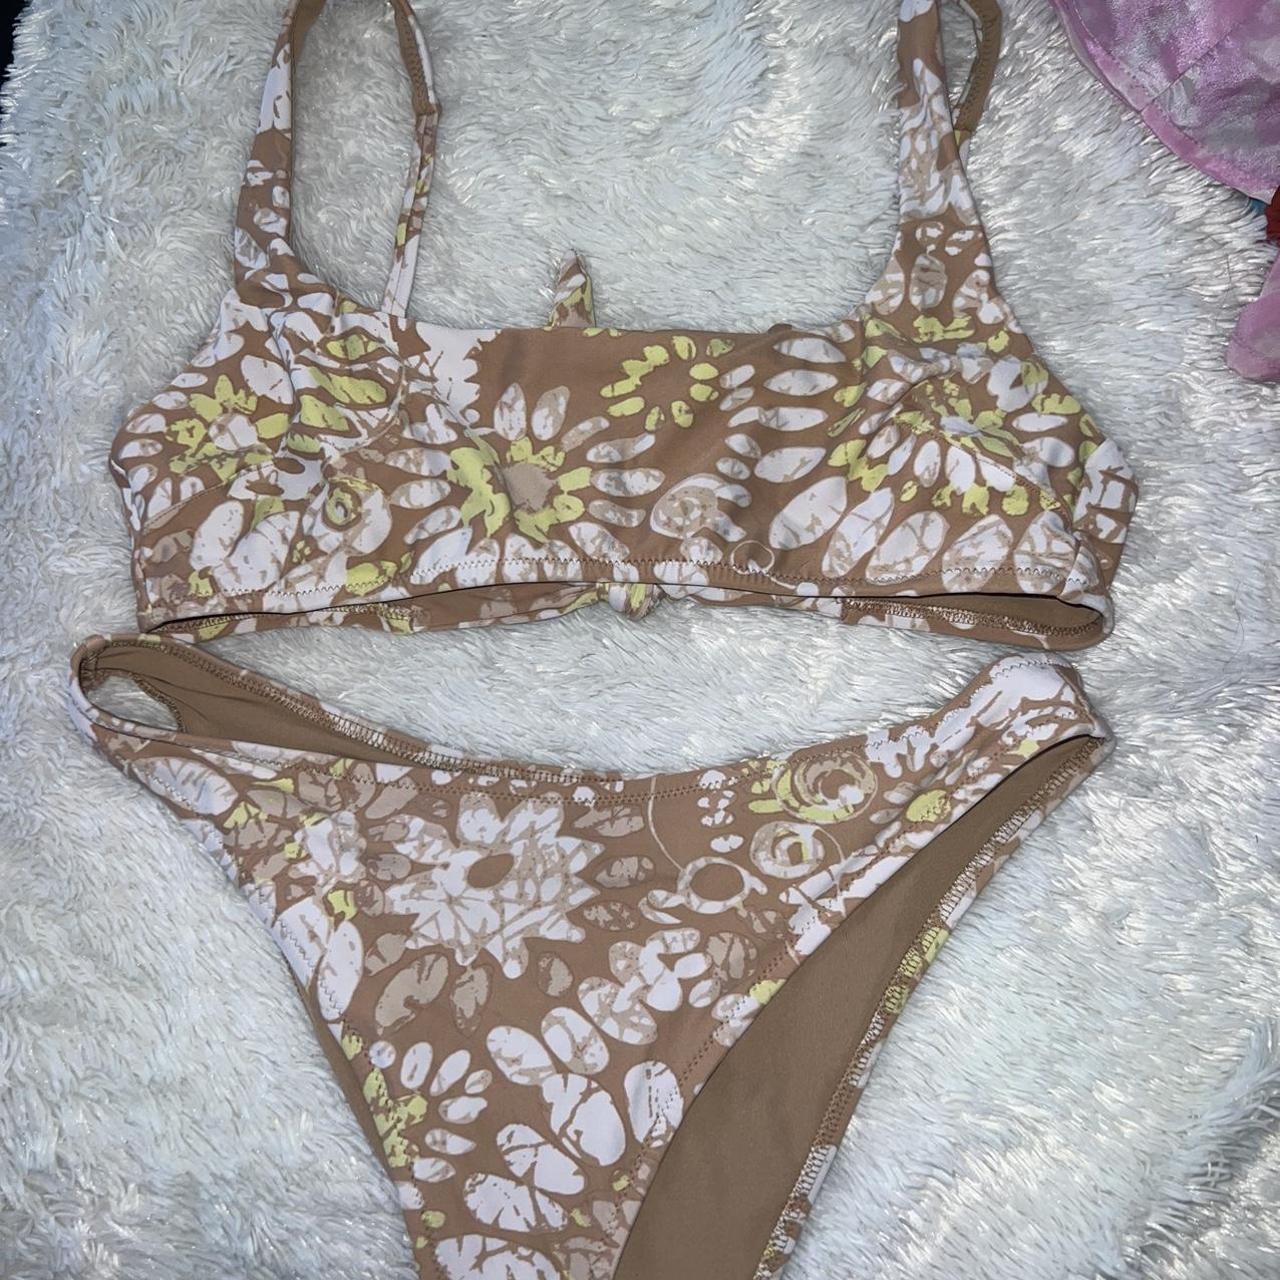 Product Image 1 - Cute patterned bikini 
Brand Arie
Size